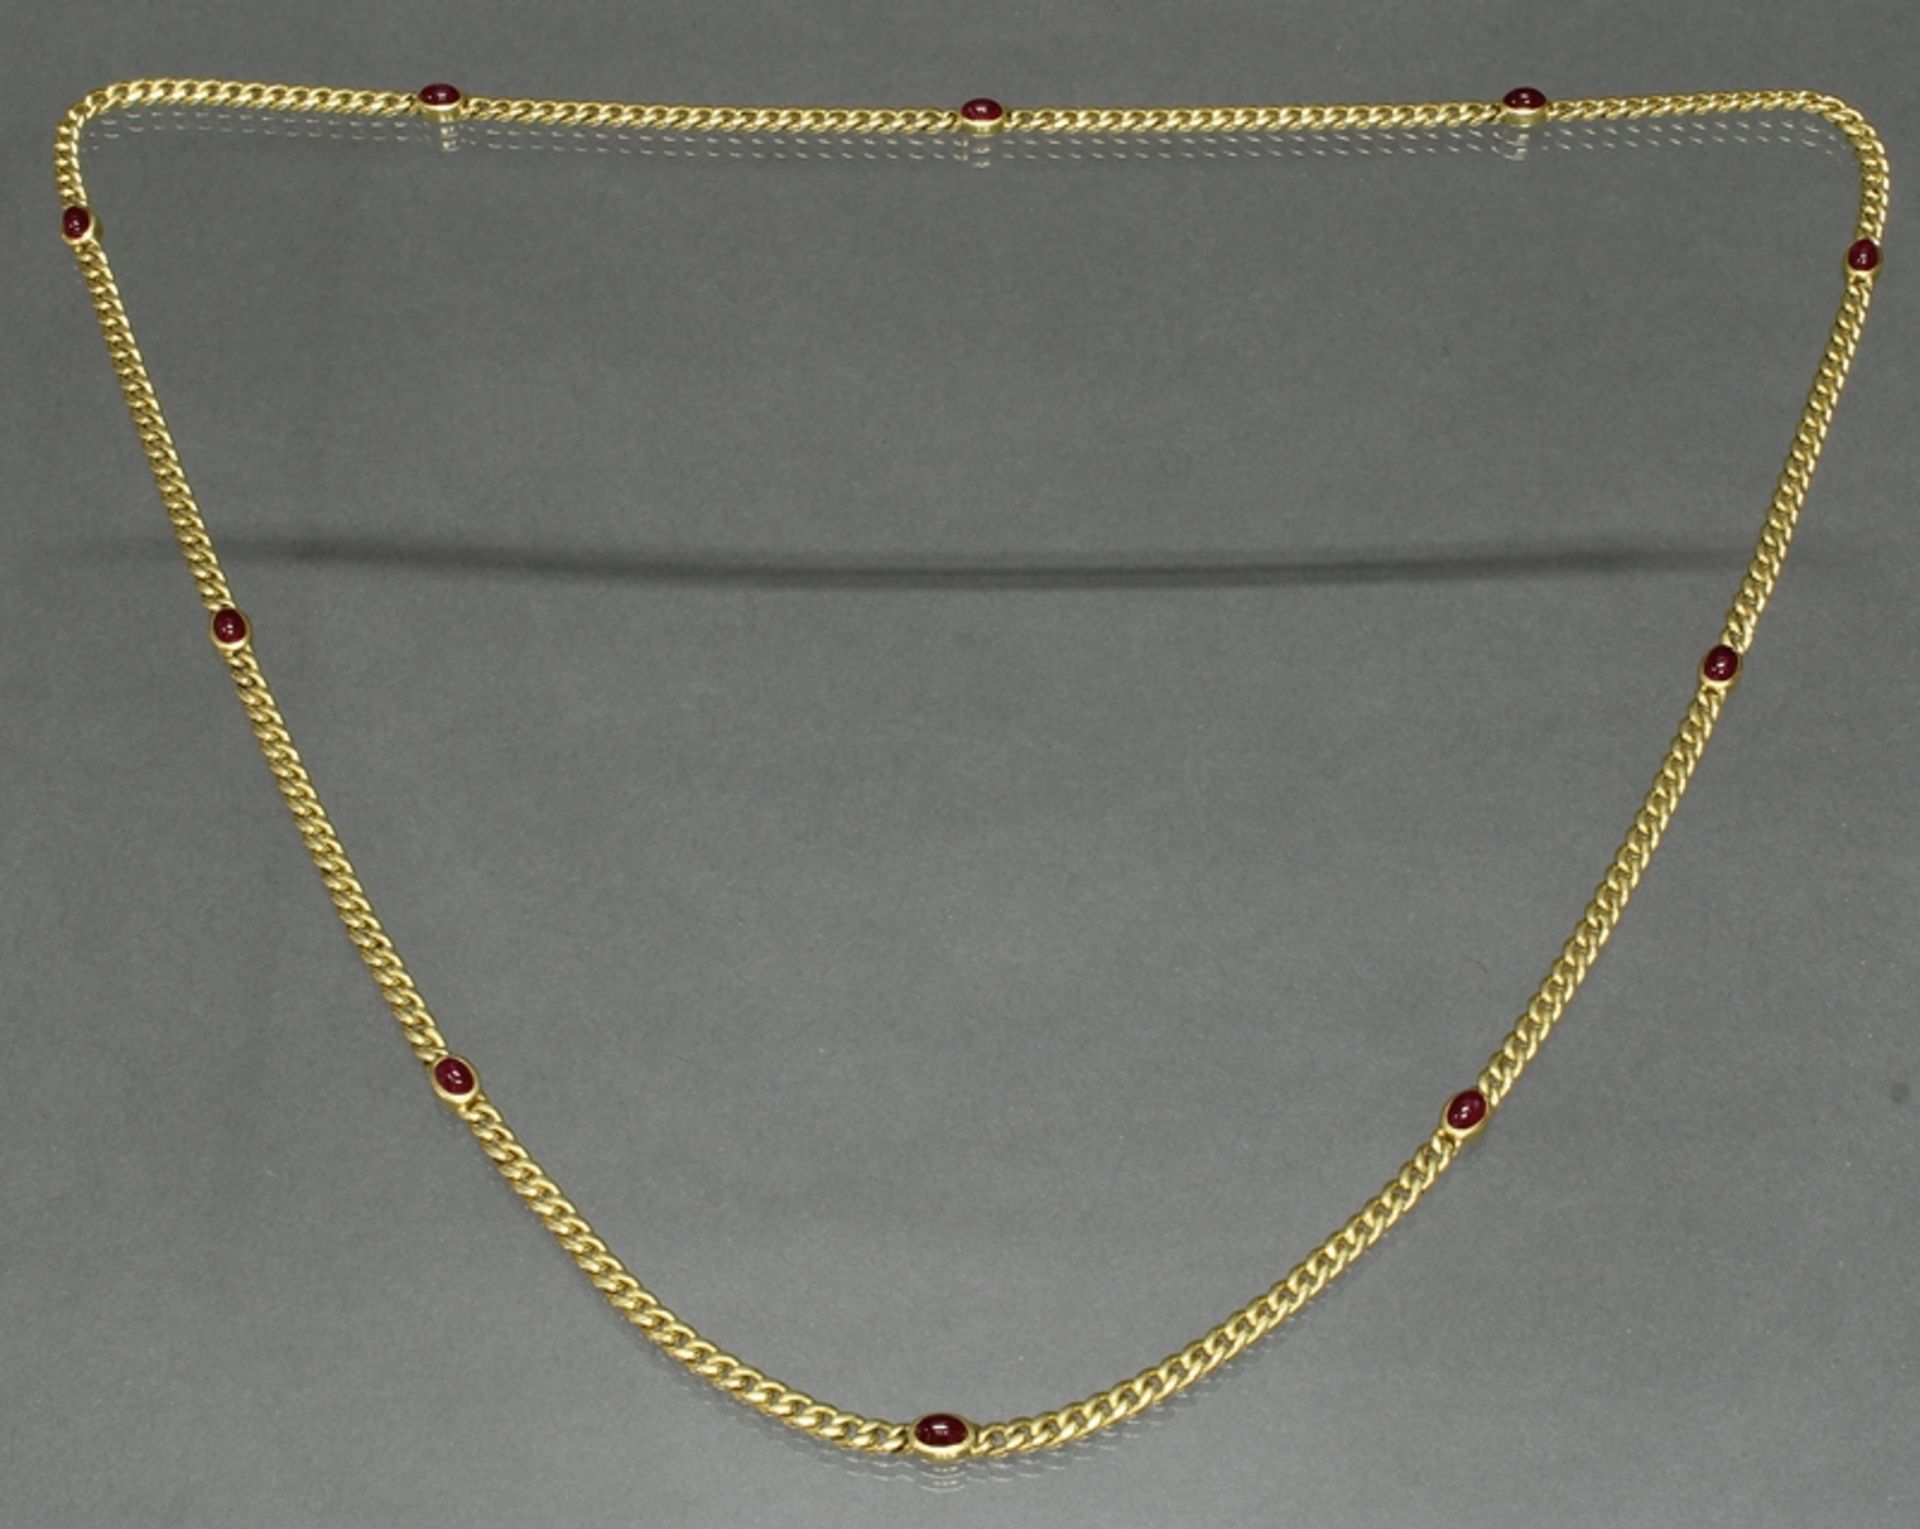 Flachpanzerkette, GG 750, endlos, 10 ovale Rubin-Cabochons, 80 cm lang, 74 g